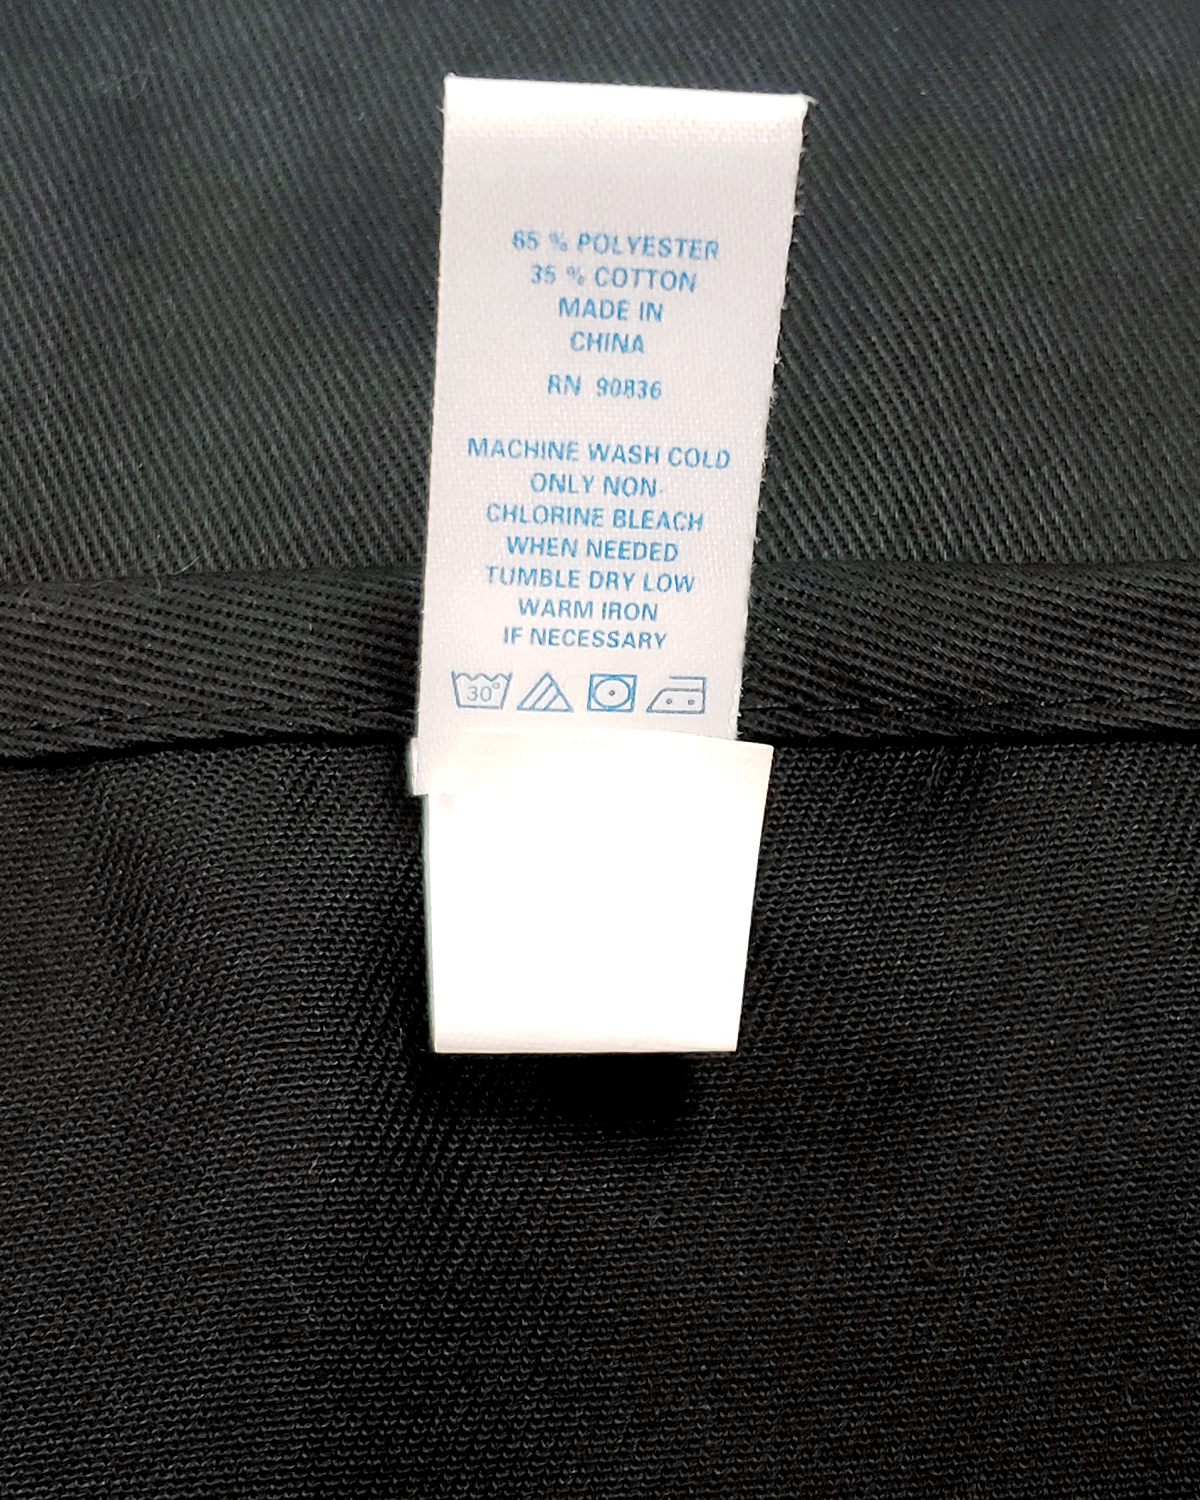 stahls garment label